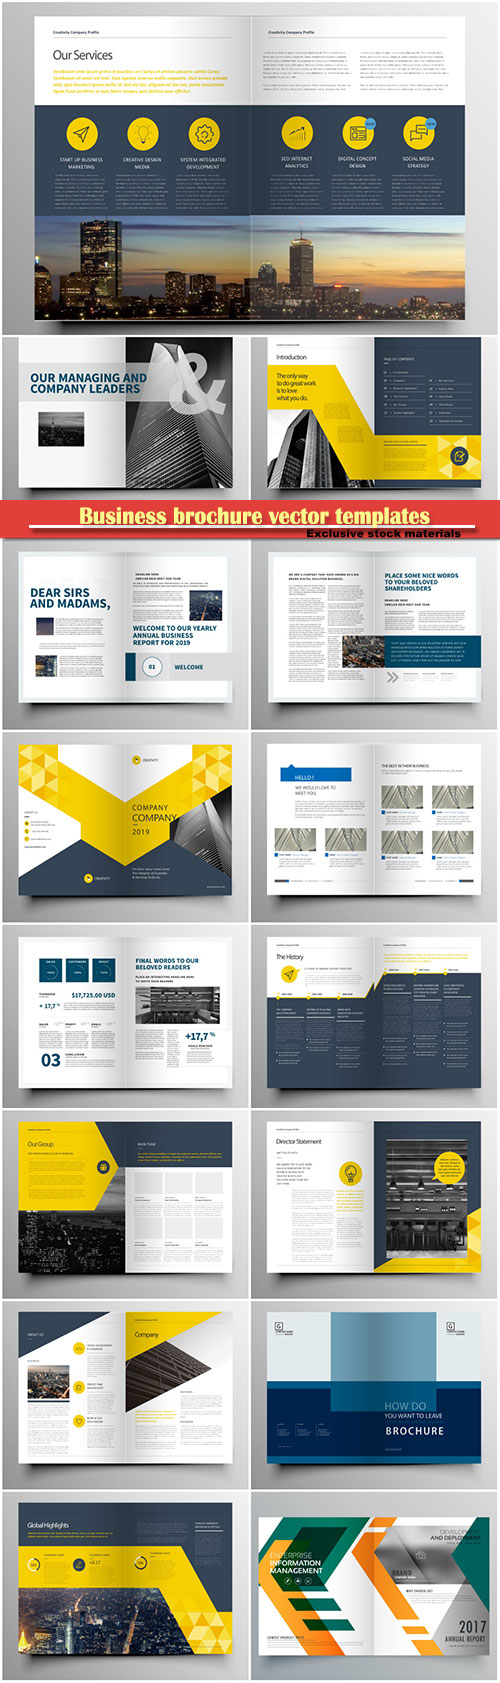 Business brochure vector templates, magazine cover, business mockup, education, presentation, report # 72